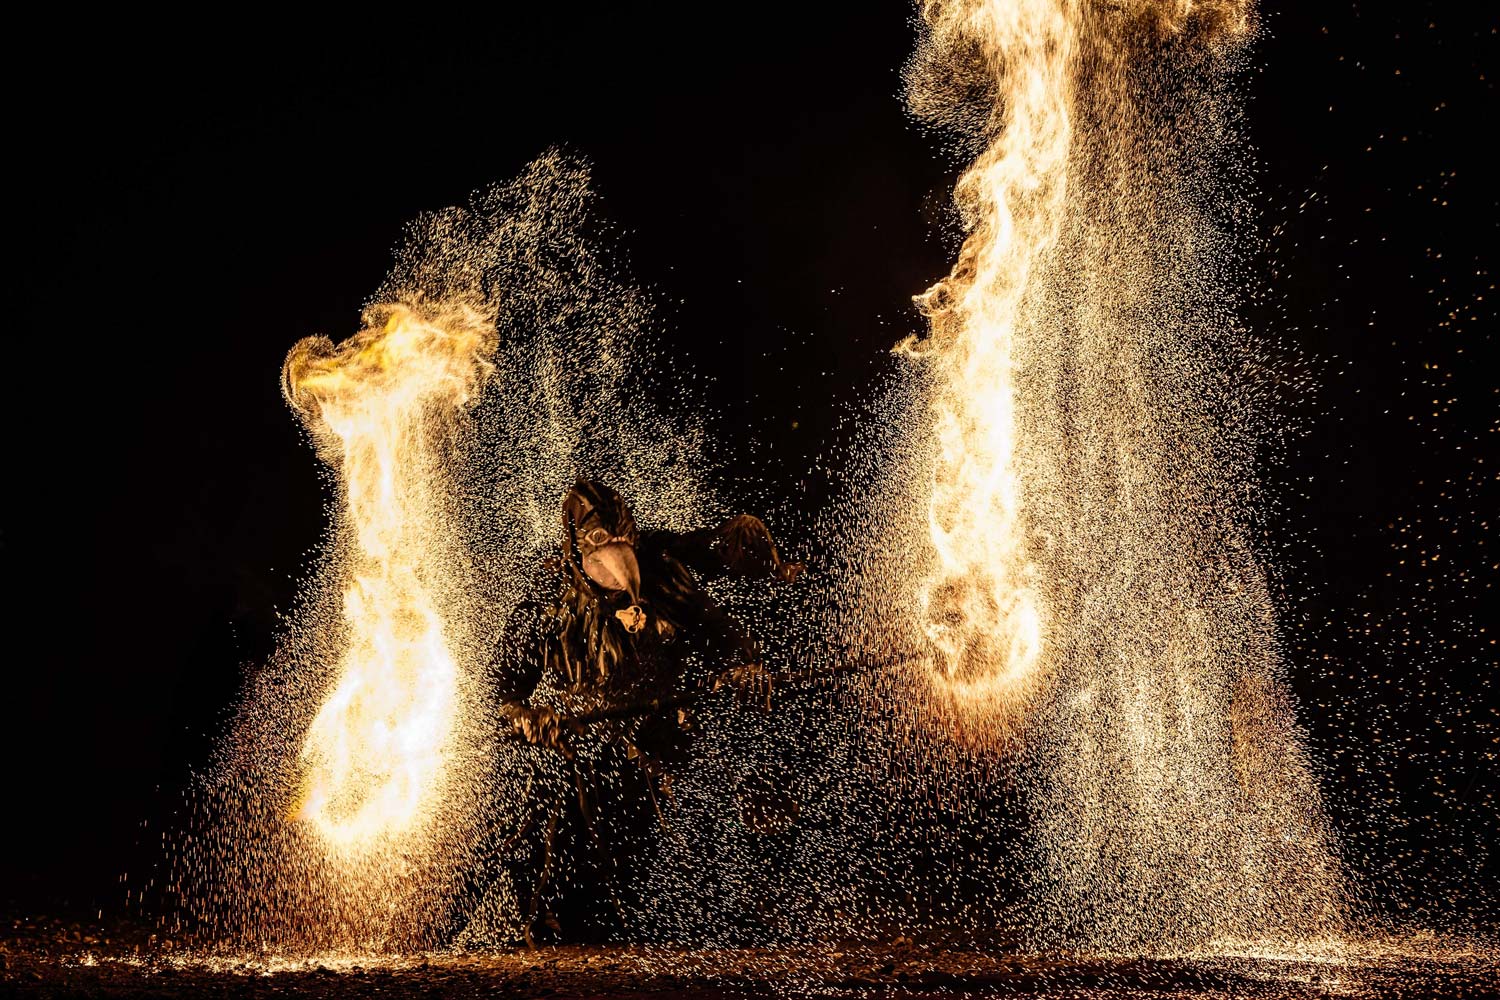 Burning Crew Flame. Fire on Amazon movie.